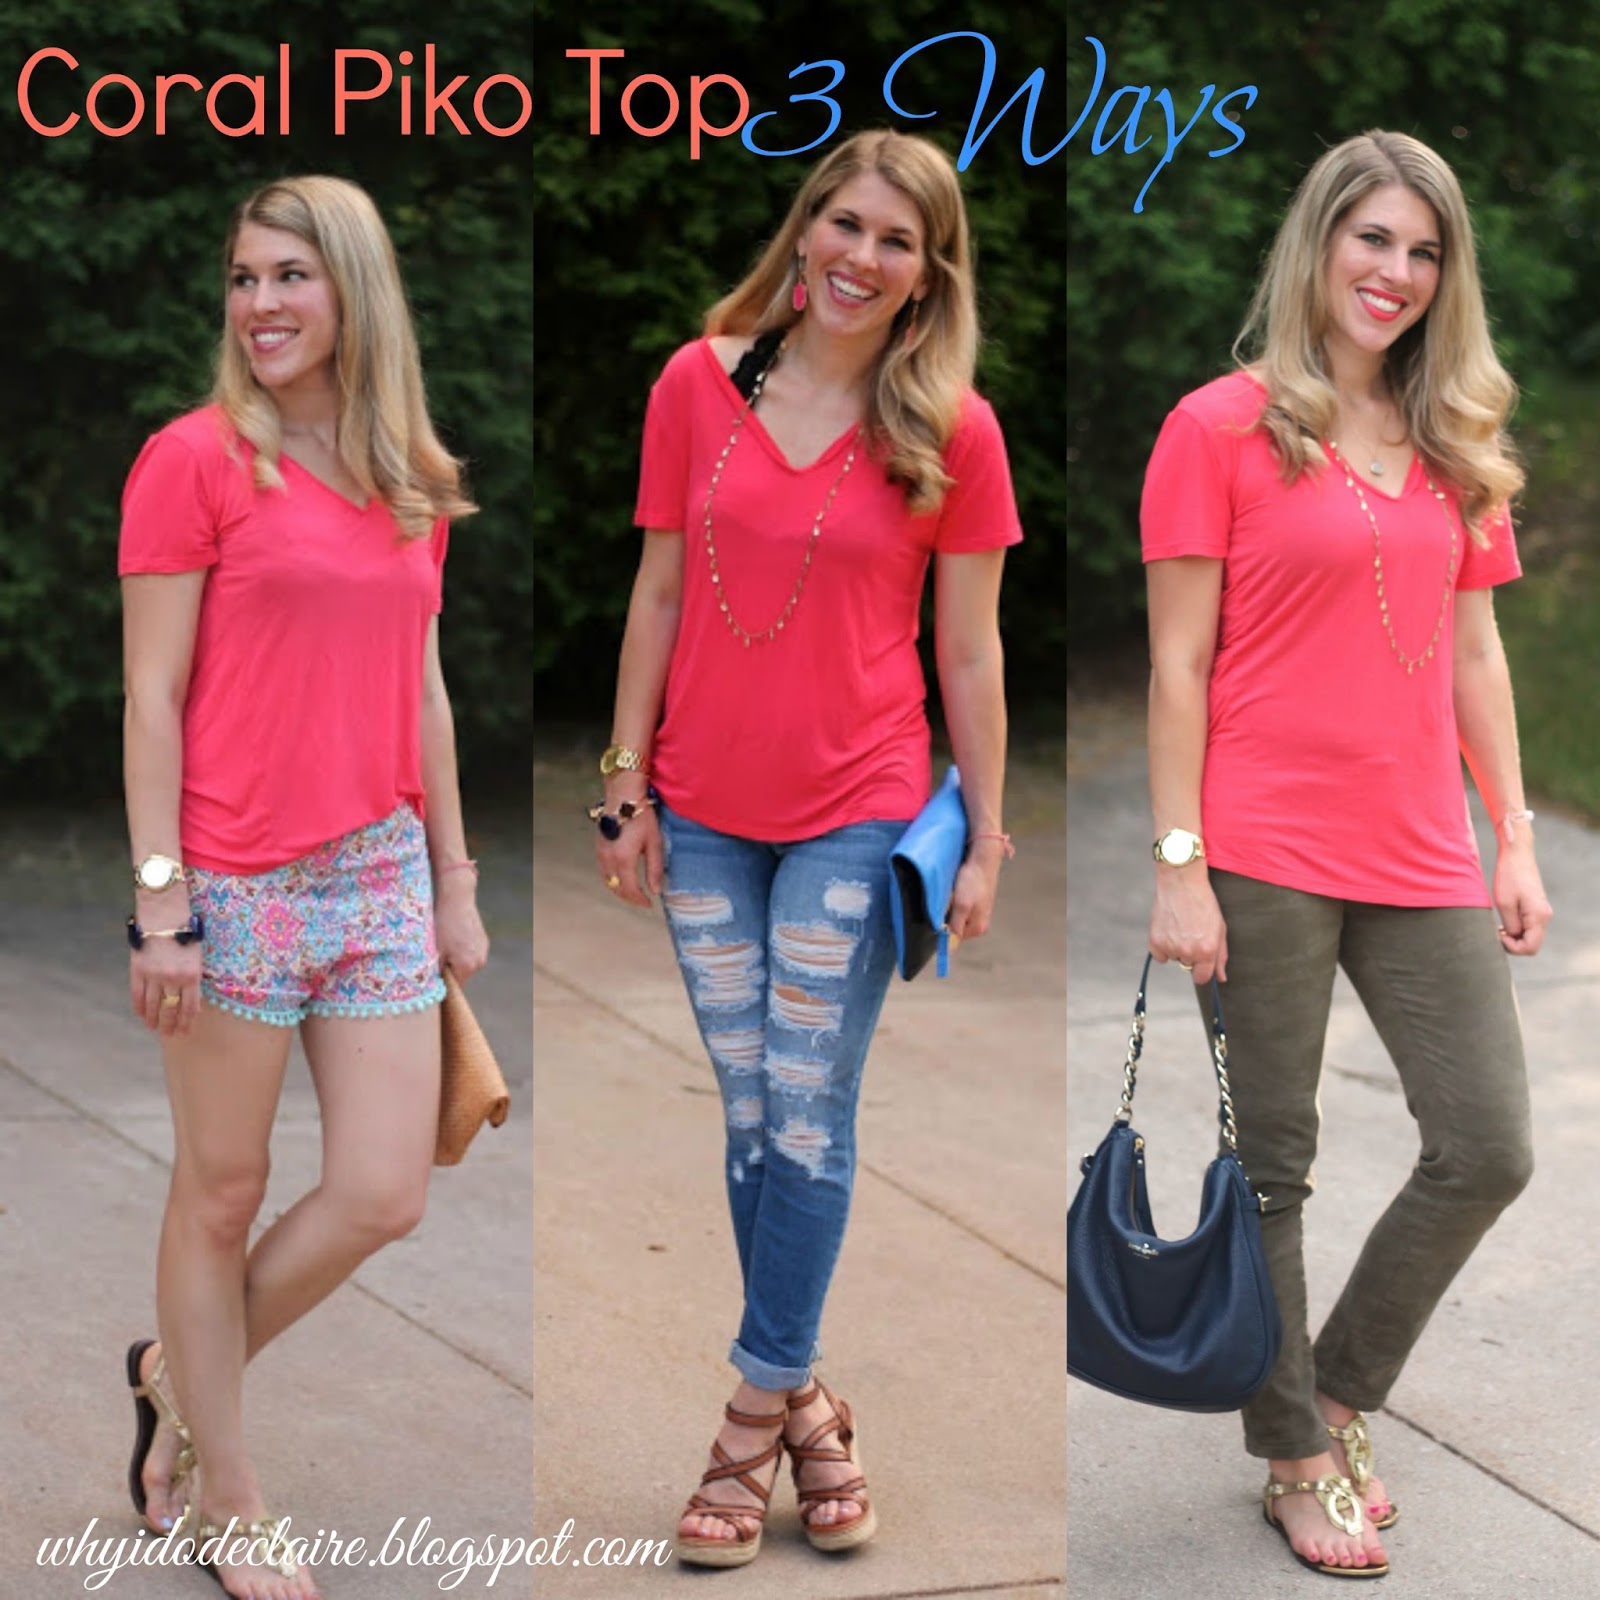 Coral Piko Top 3 Ways